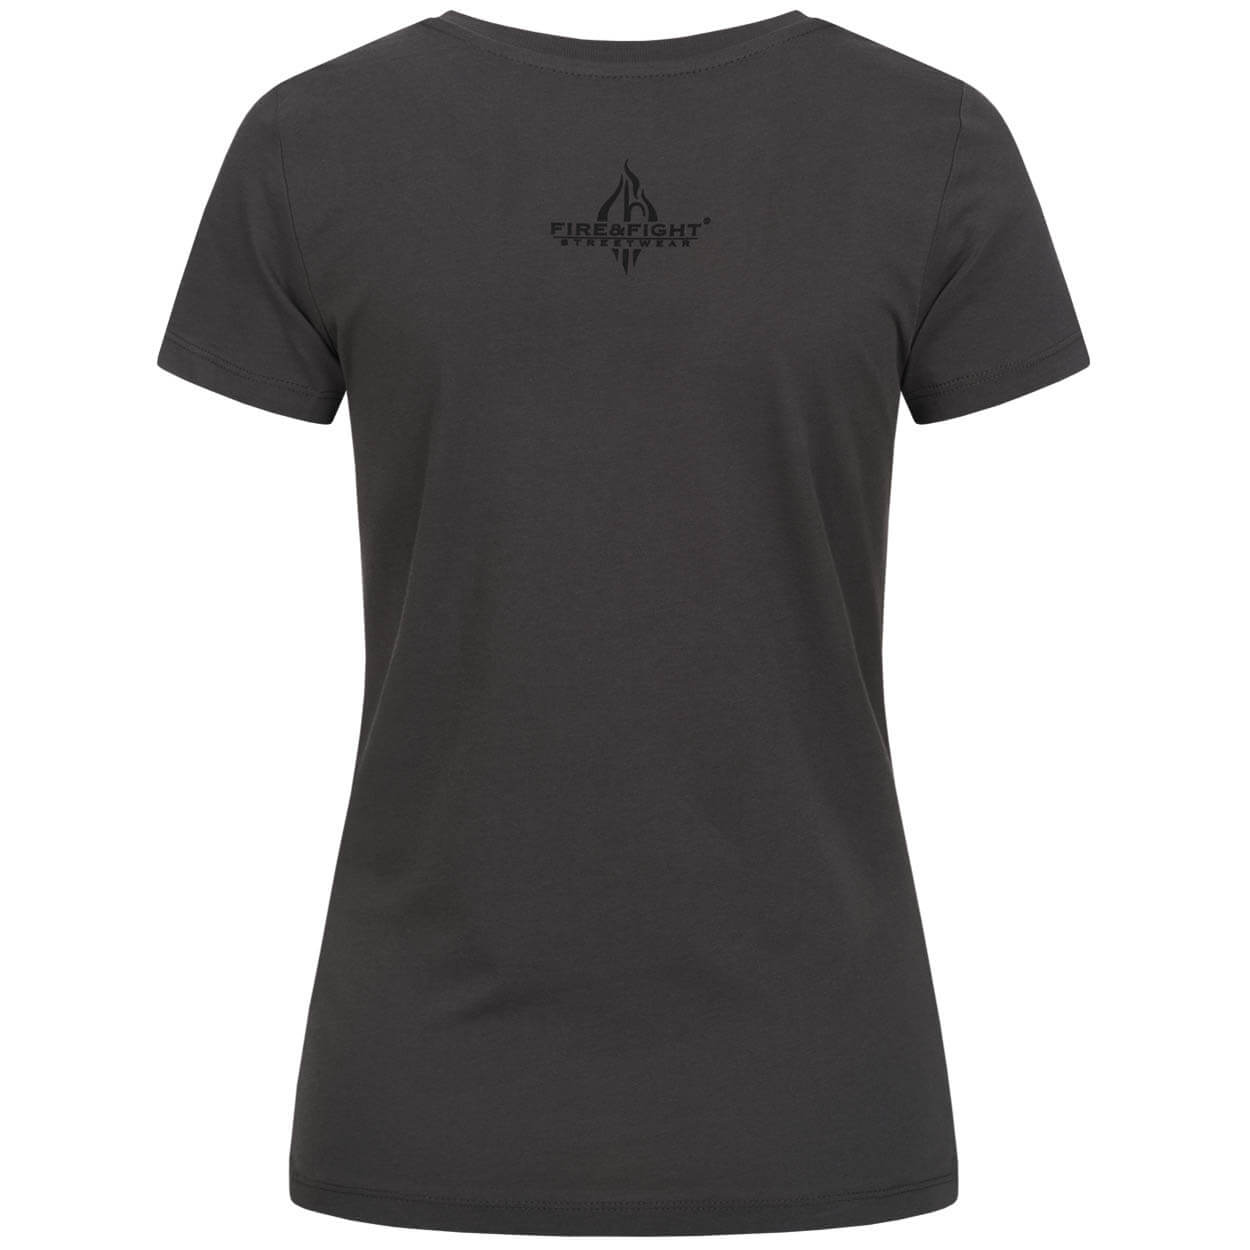 Retten Löschen Bergen Schützen - Design Frauen T-Shirt Anthracite